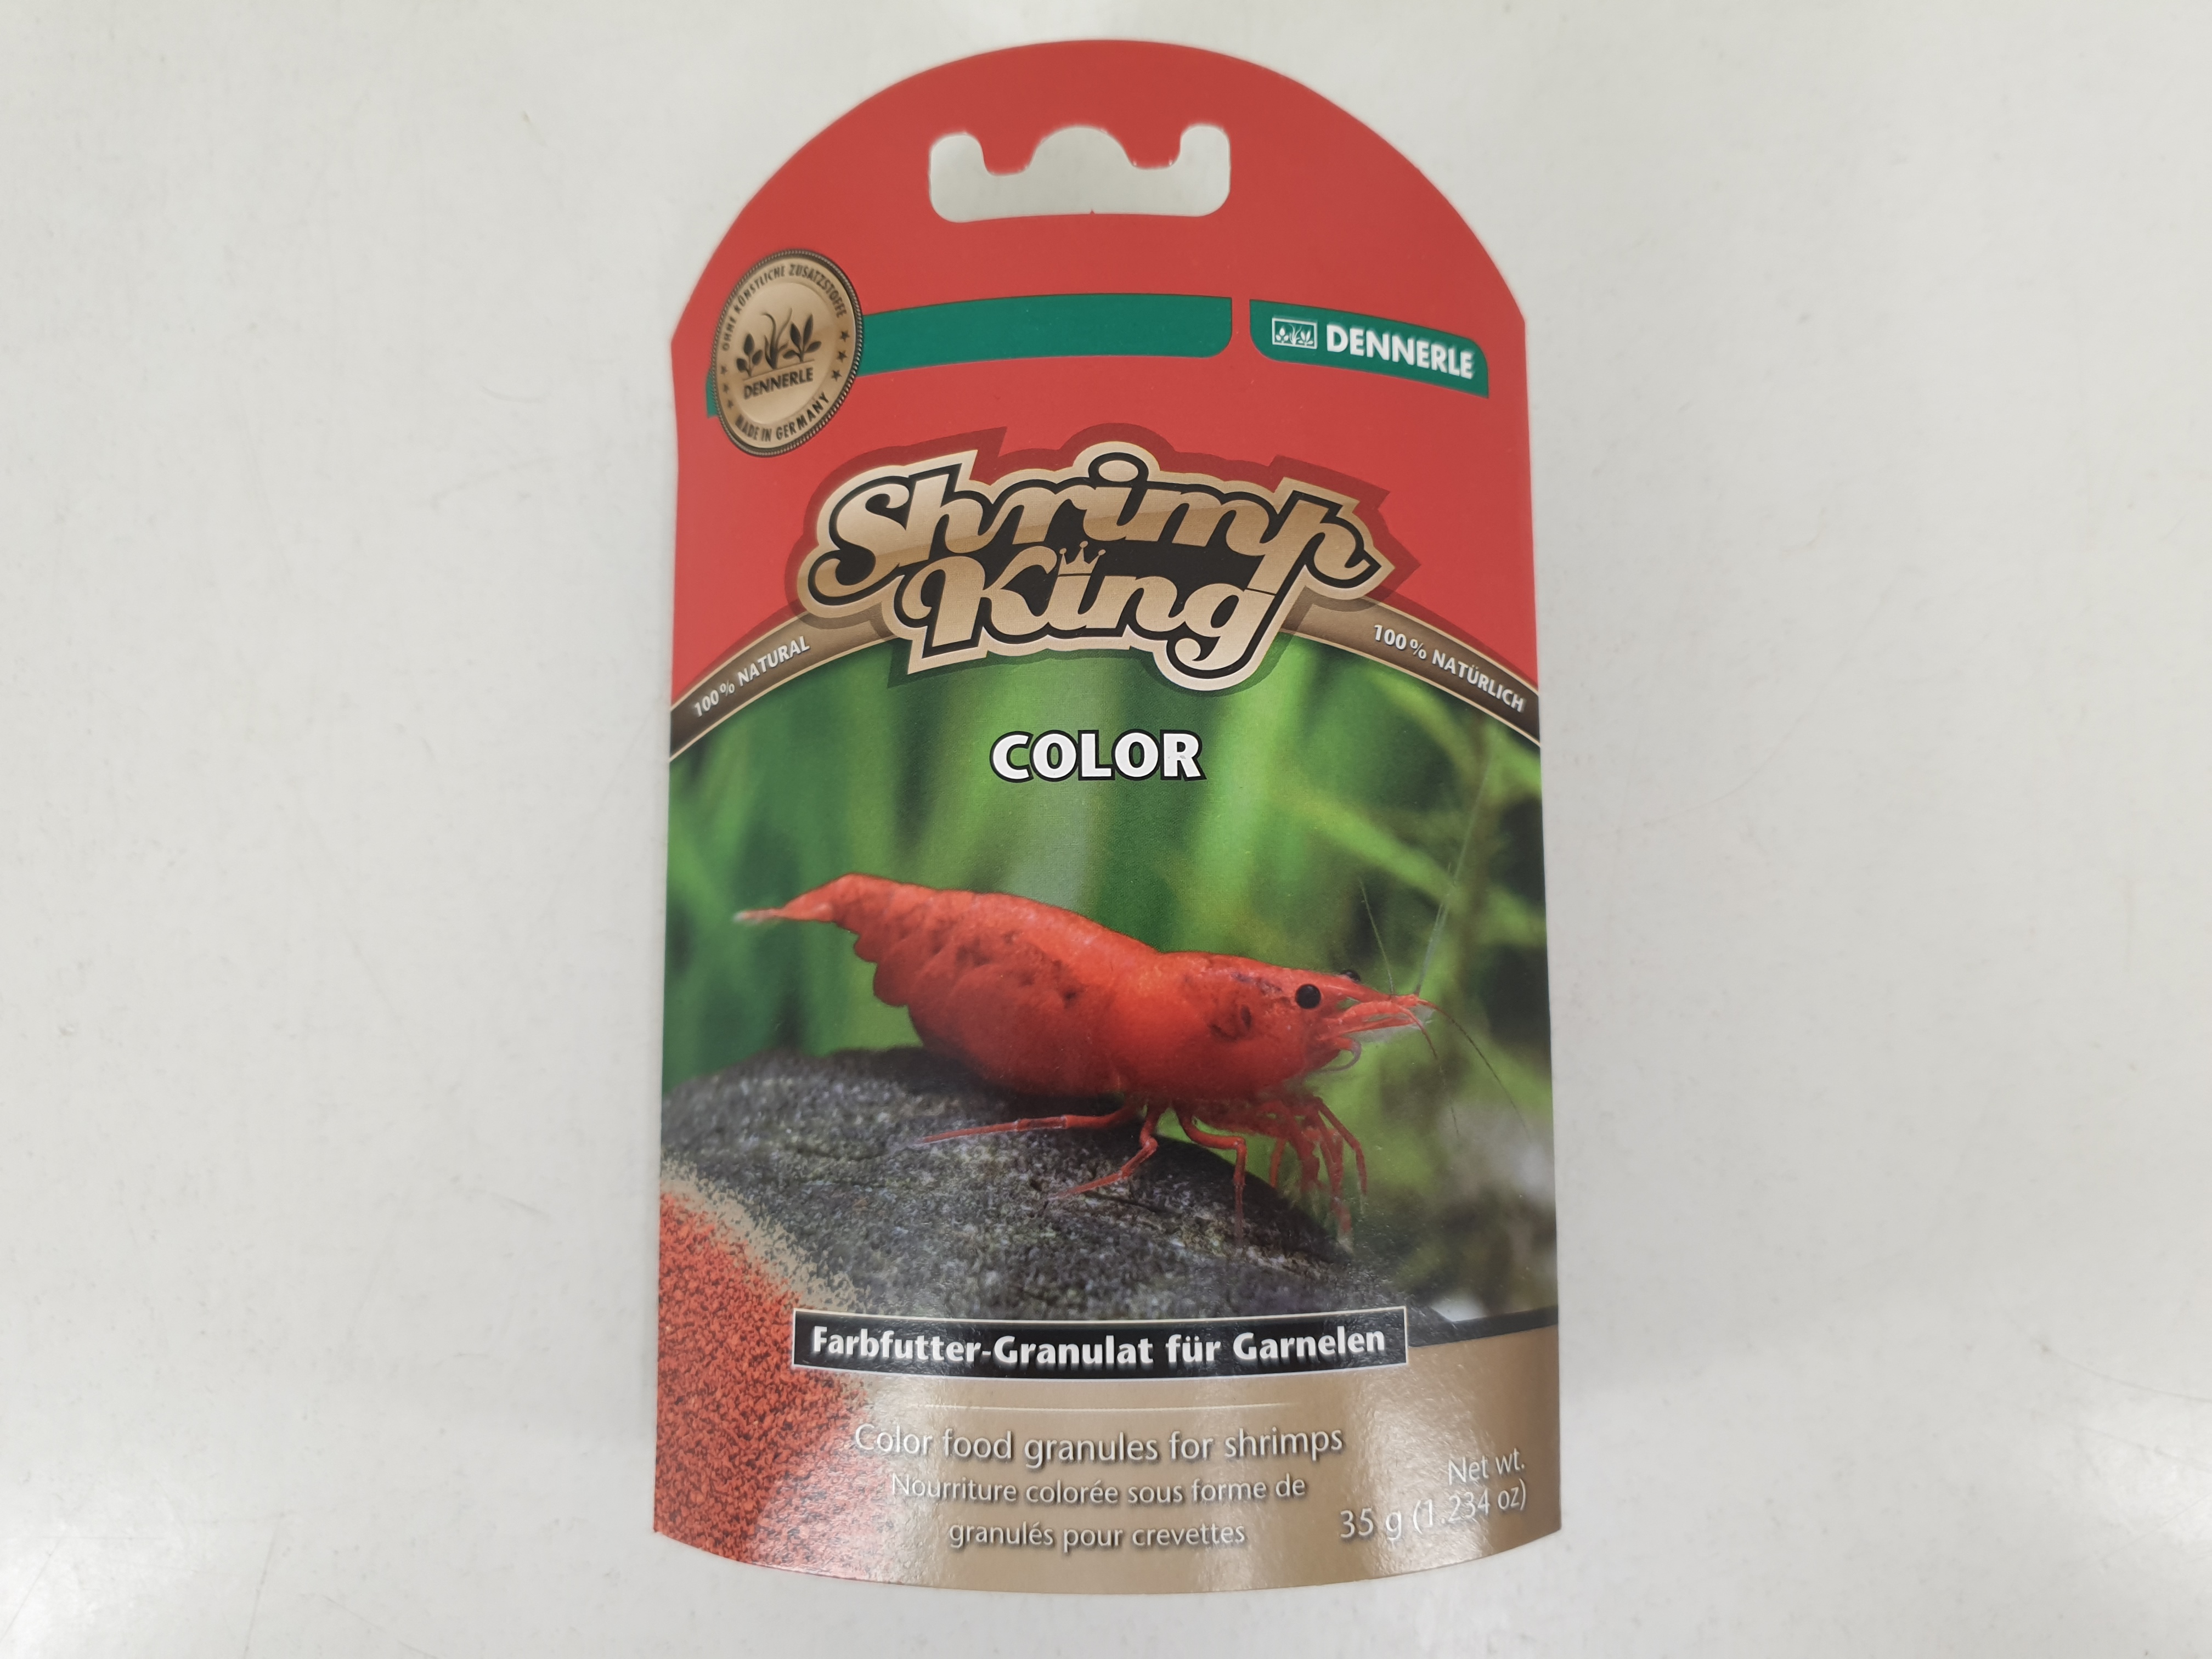 Dennerle Shrimp King Color - Farbfutter-Granulat für Garnelen 35g